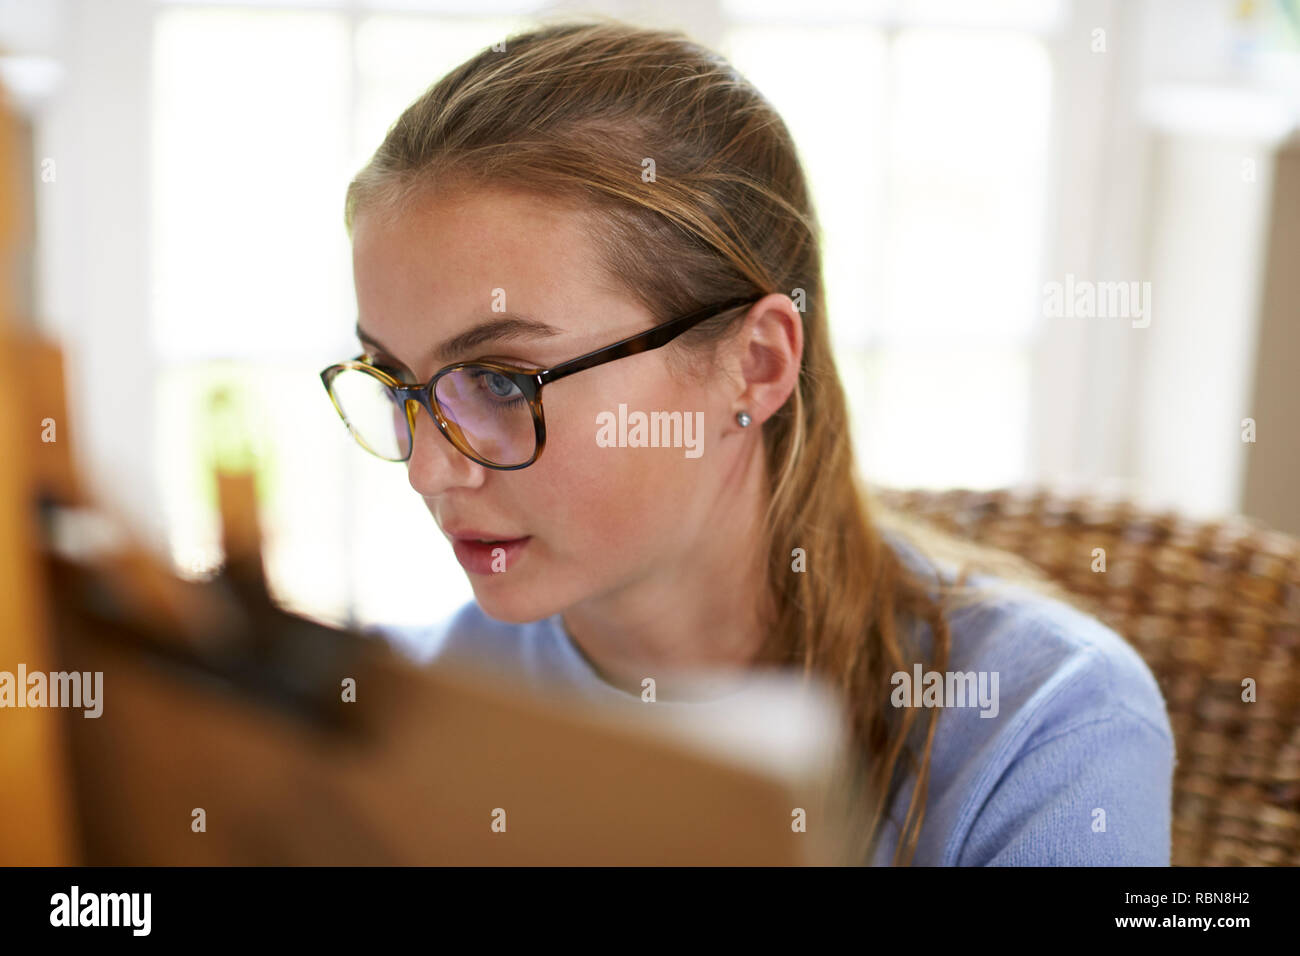 Artista Adolescente femenino sentado en caballete imagen de dibujo Foto de stock